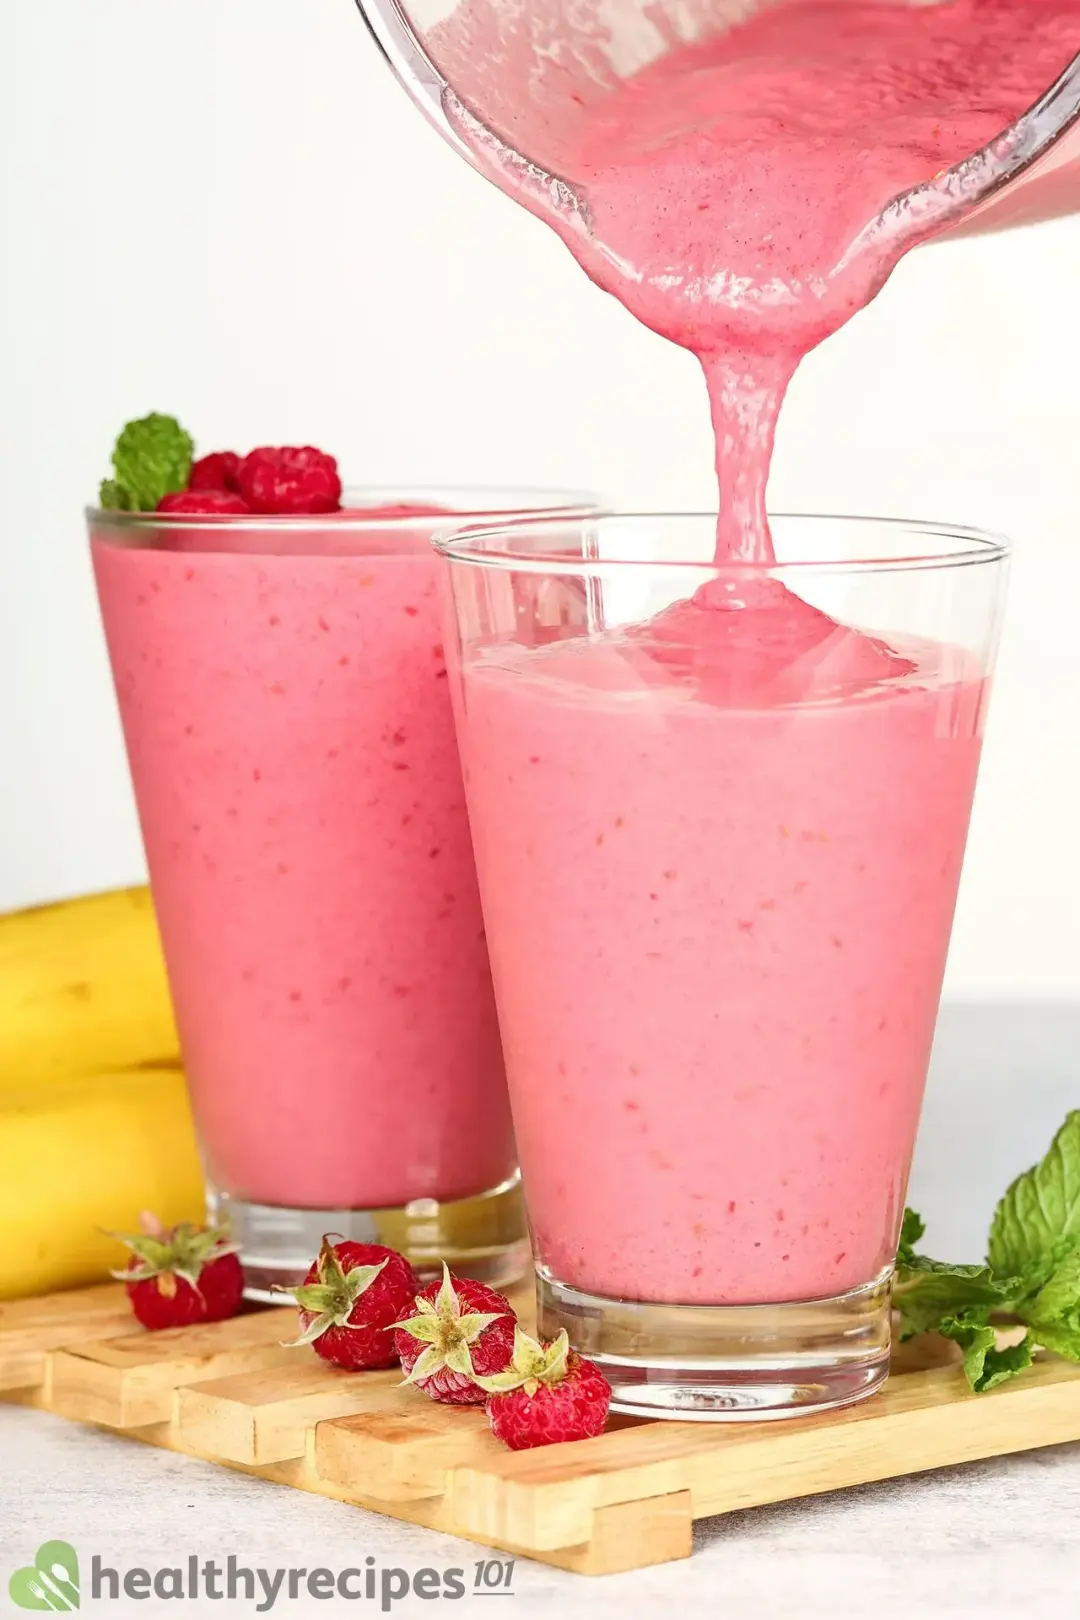 Benefits of Raspberries smoothie